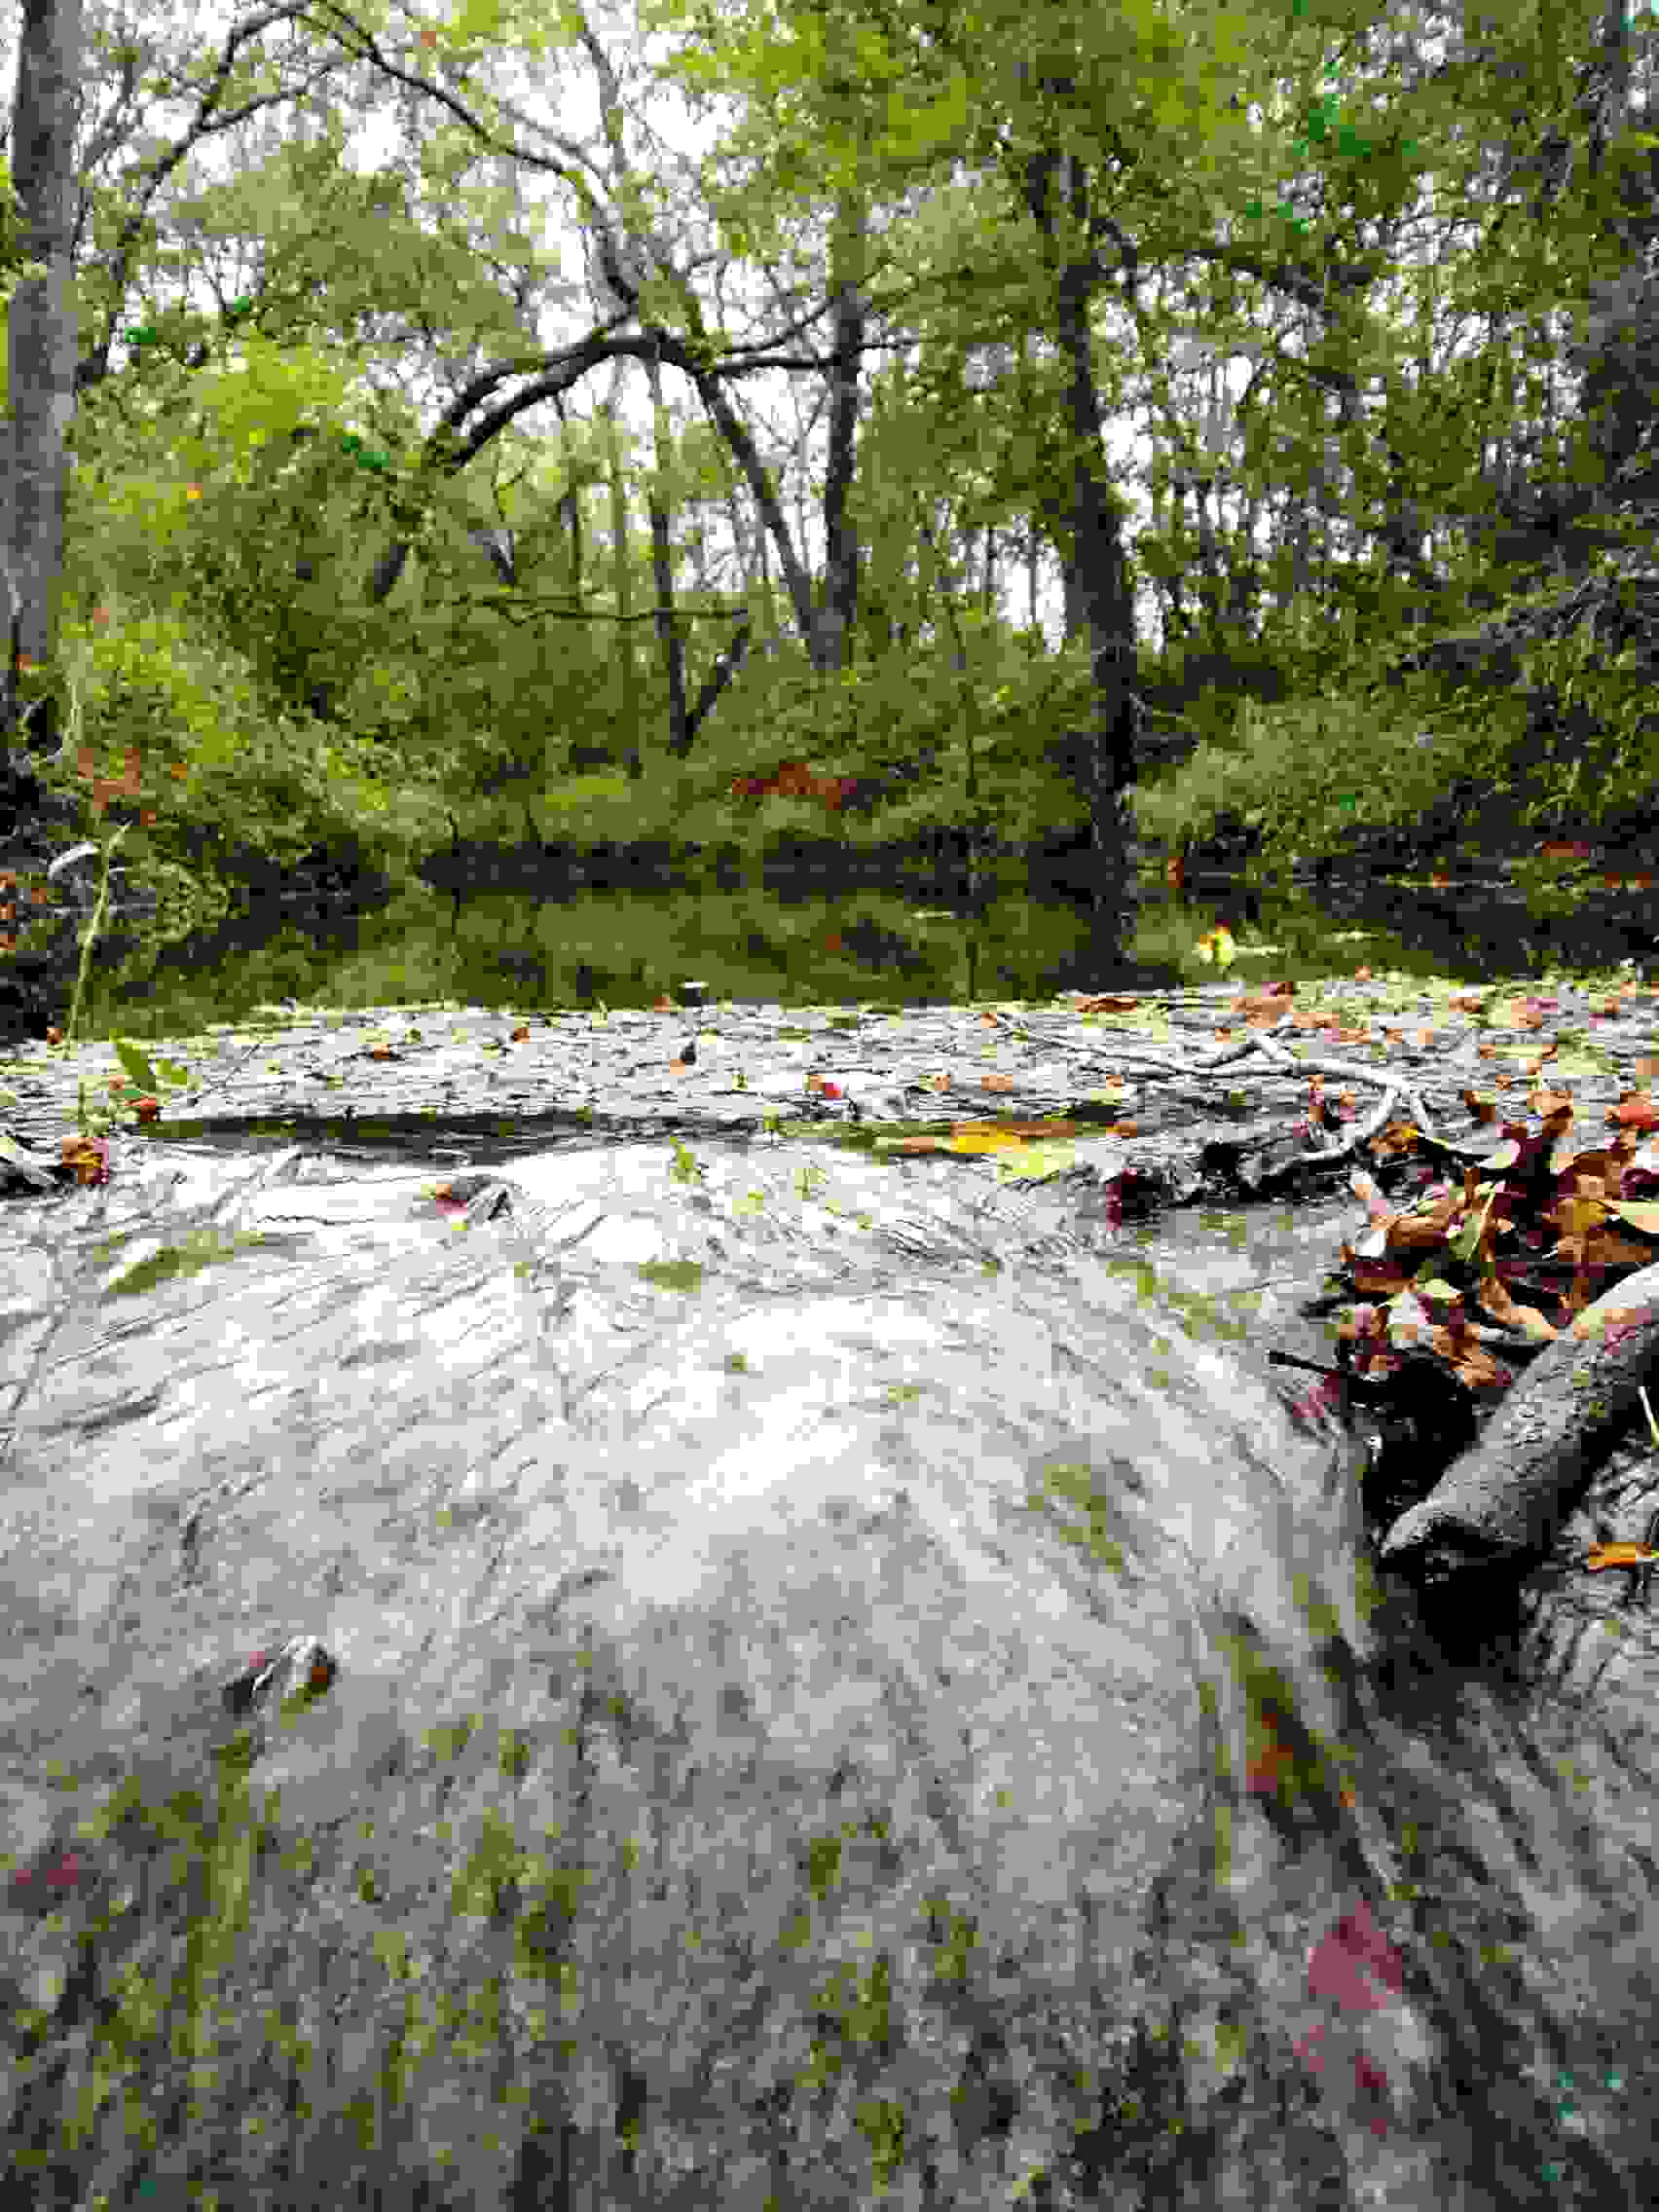 Texas Riparian and Stream Ecosystem Education Program - Plum Creek Watershed